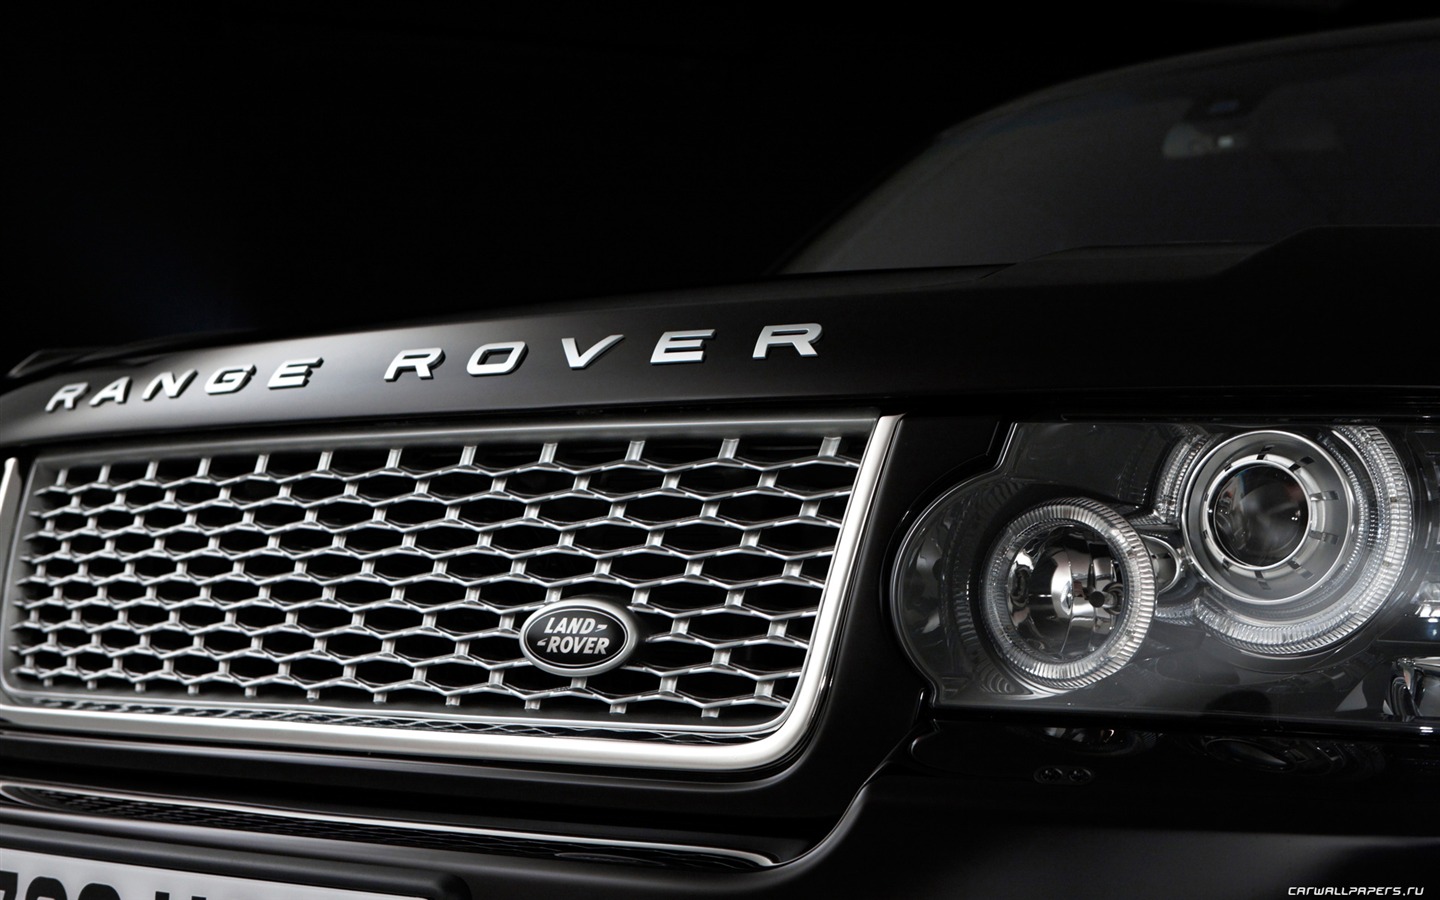 Land Rover Range Rover Black Edition - 2011 路虎 #21 - 1440x900